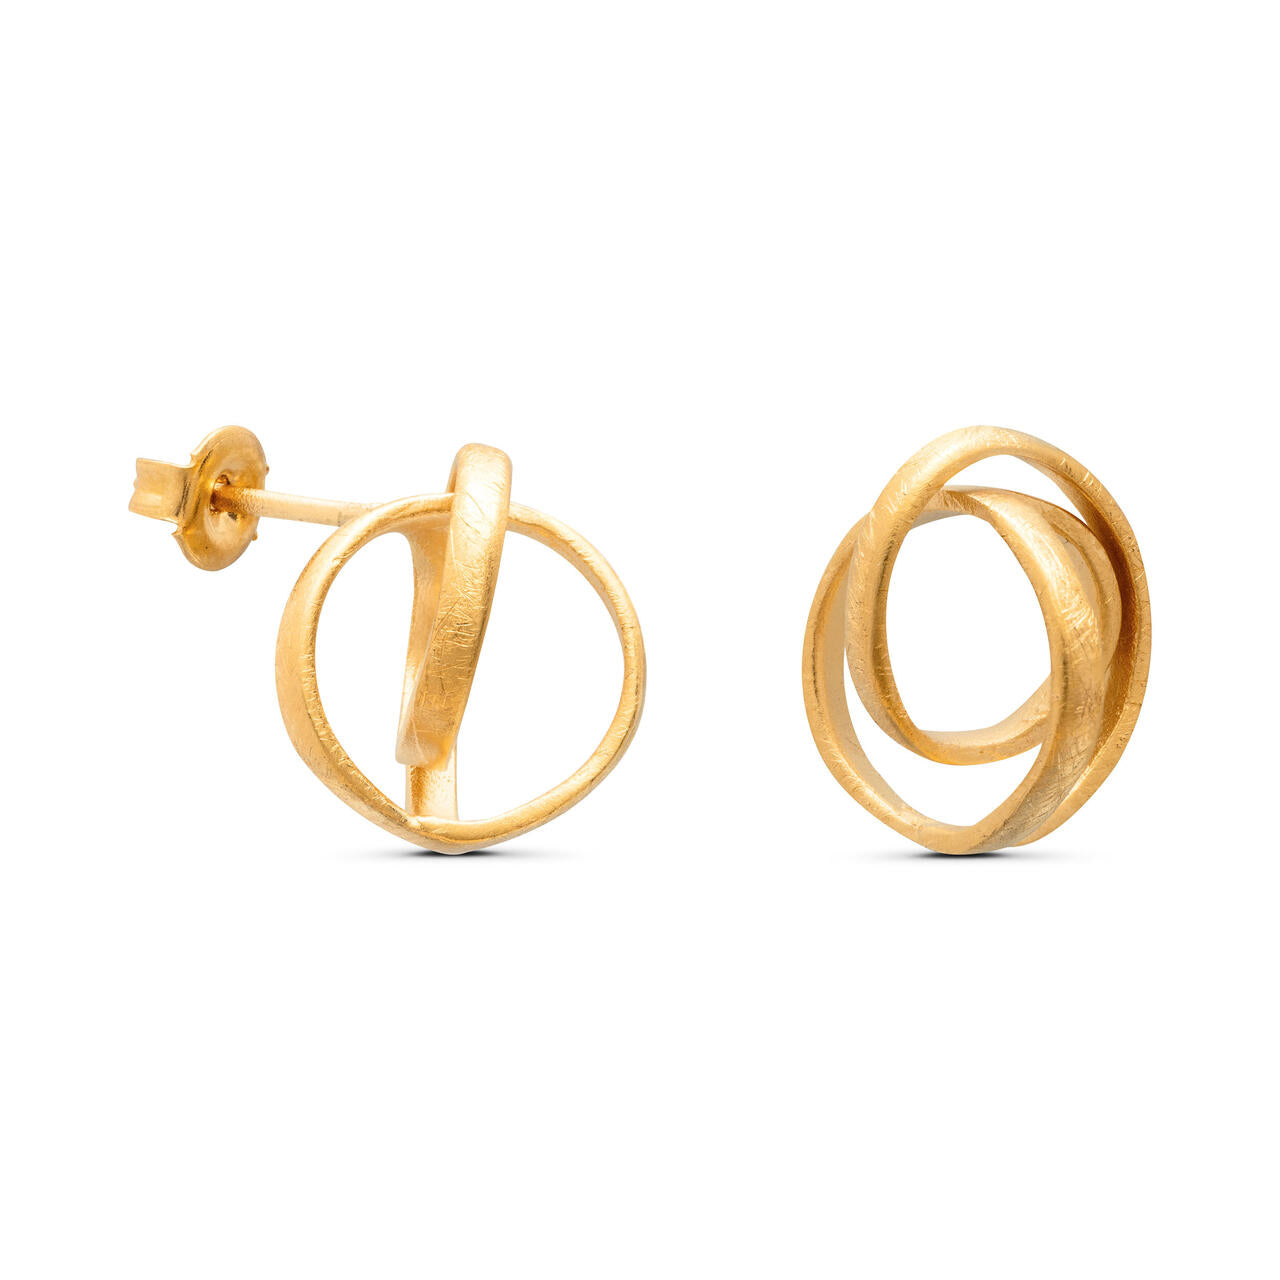 Emoblic Golden Earrings